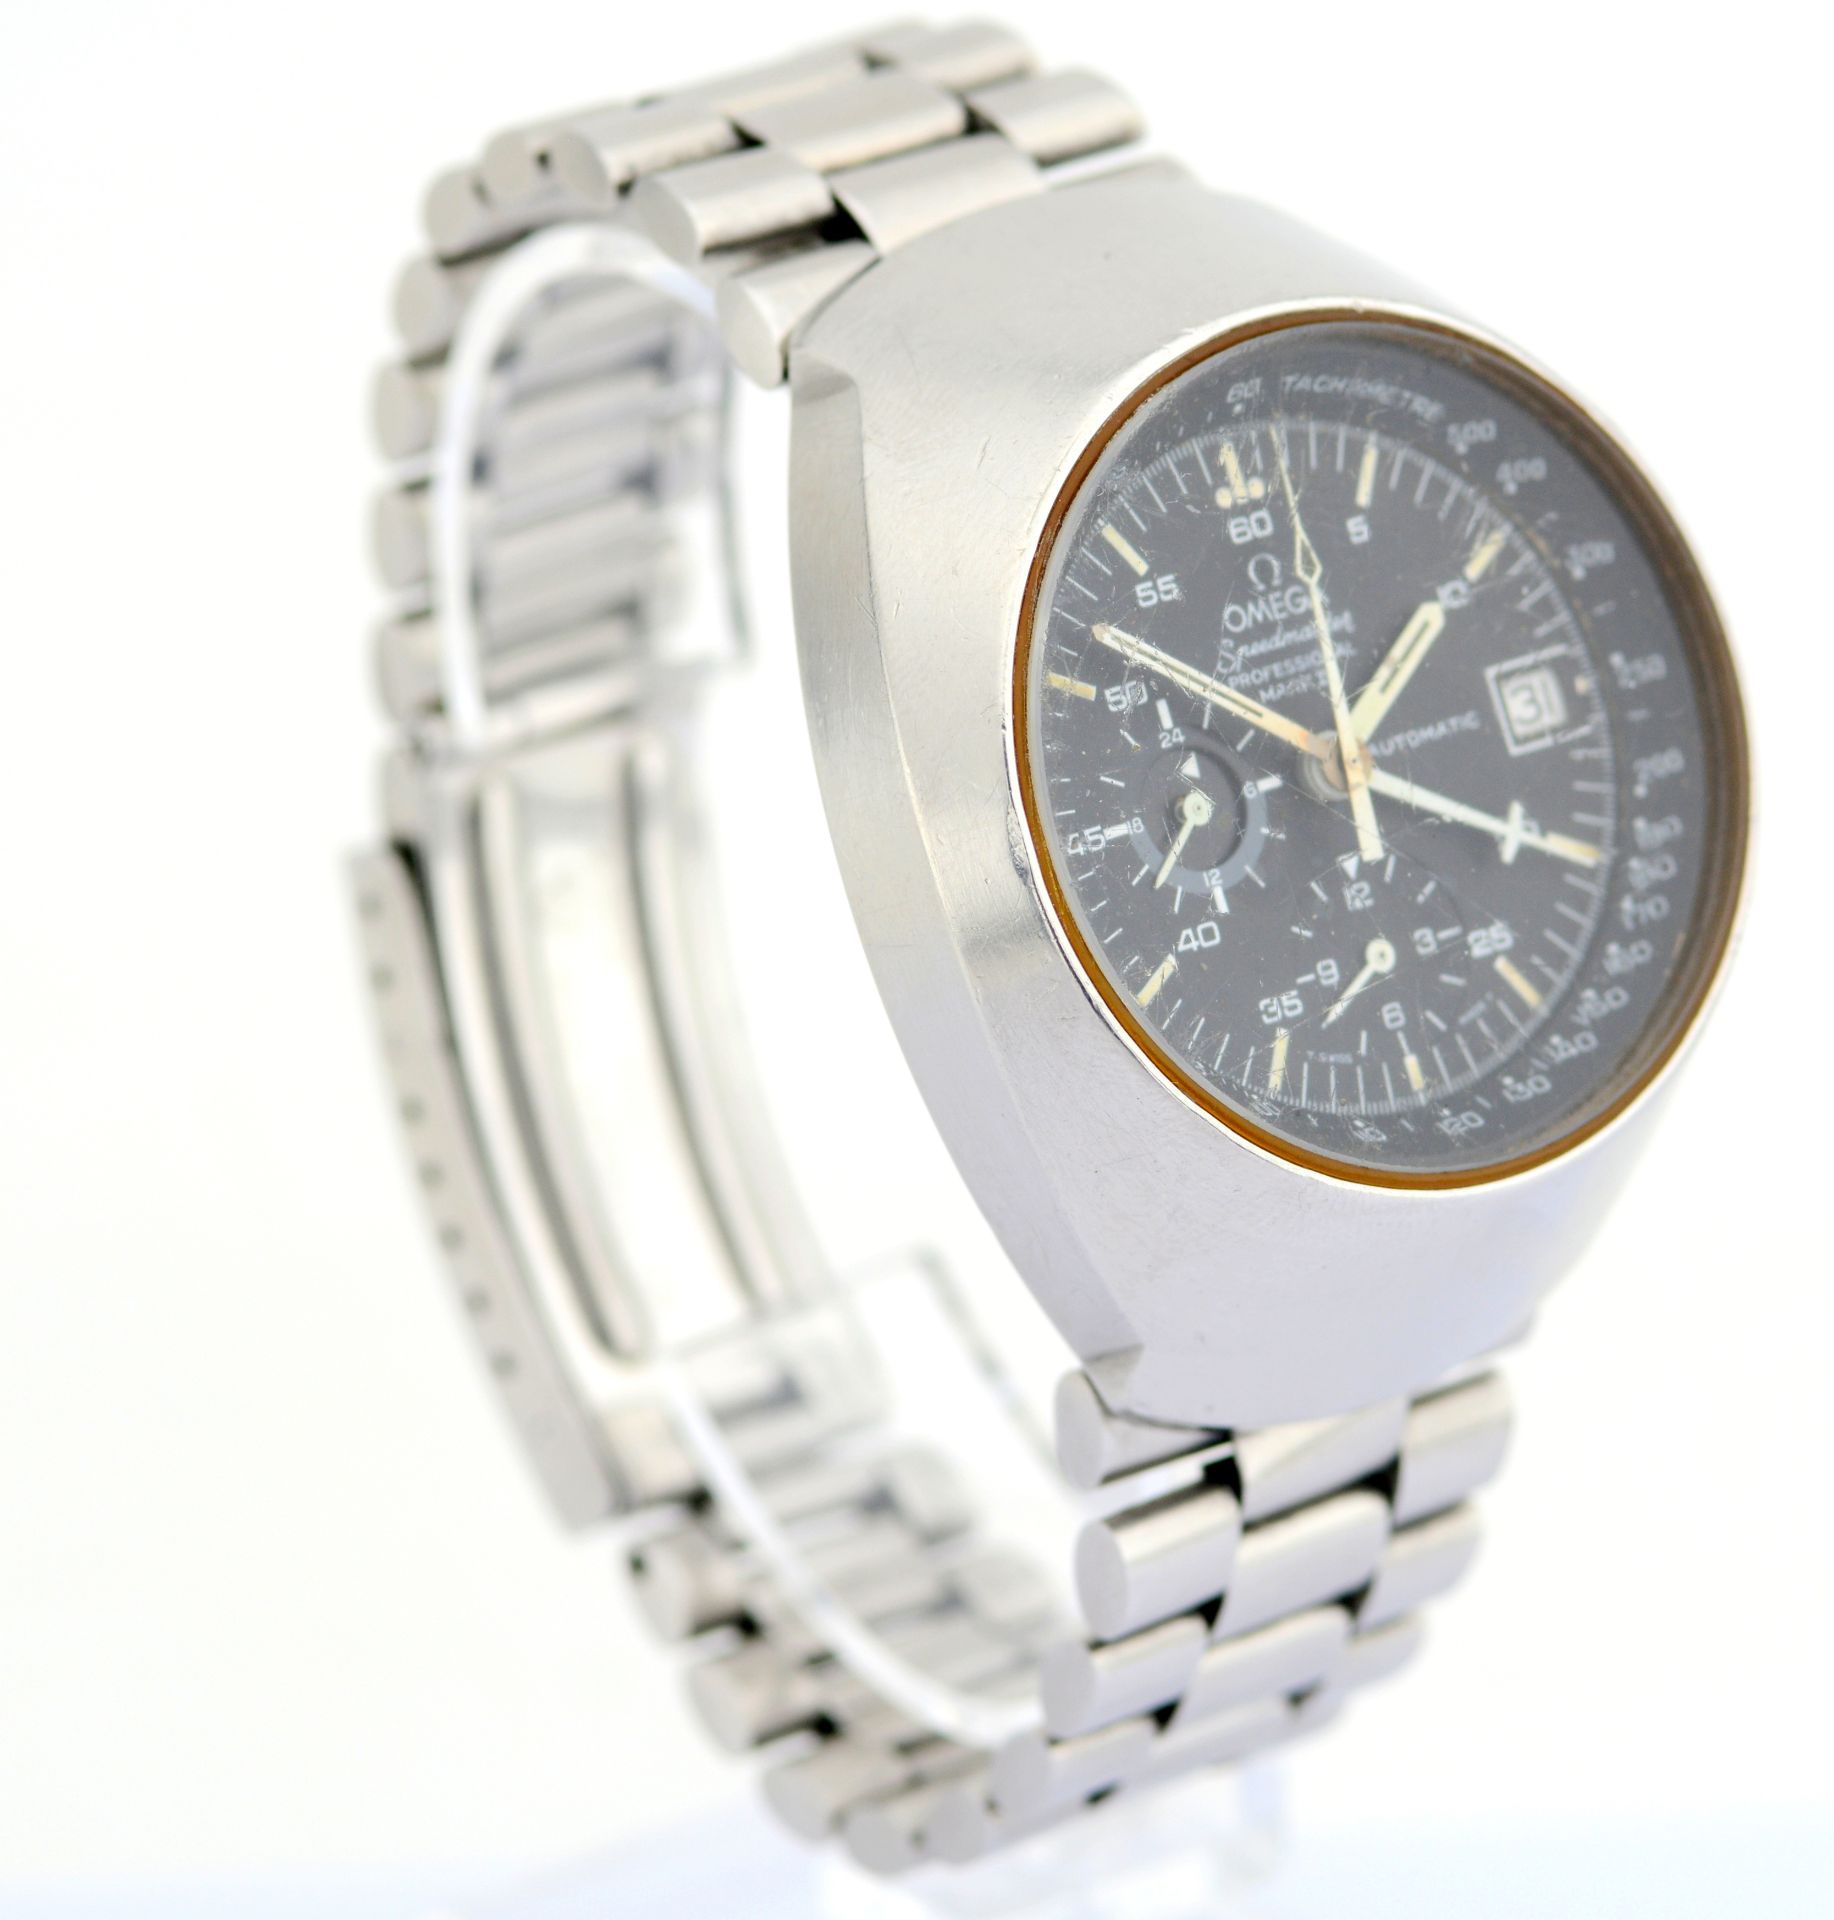 Omega / Speedmaster Mark III - Gentlmen's Gold/Steel Wrist Watch - Image 2 of 7